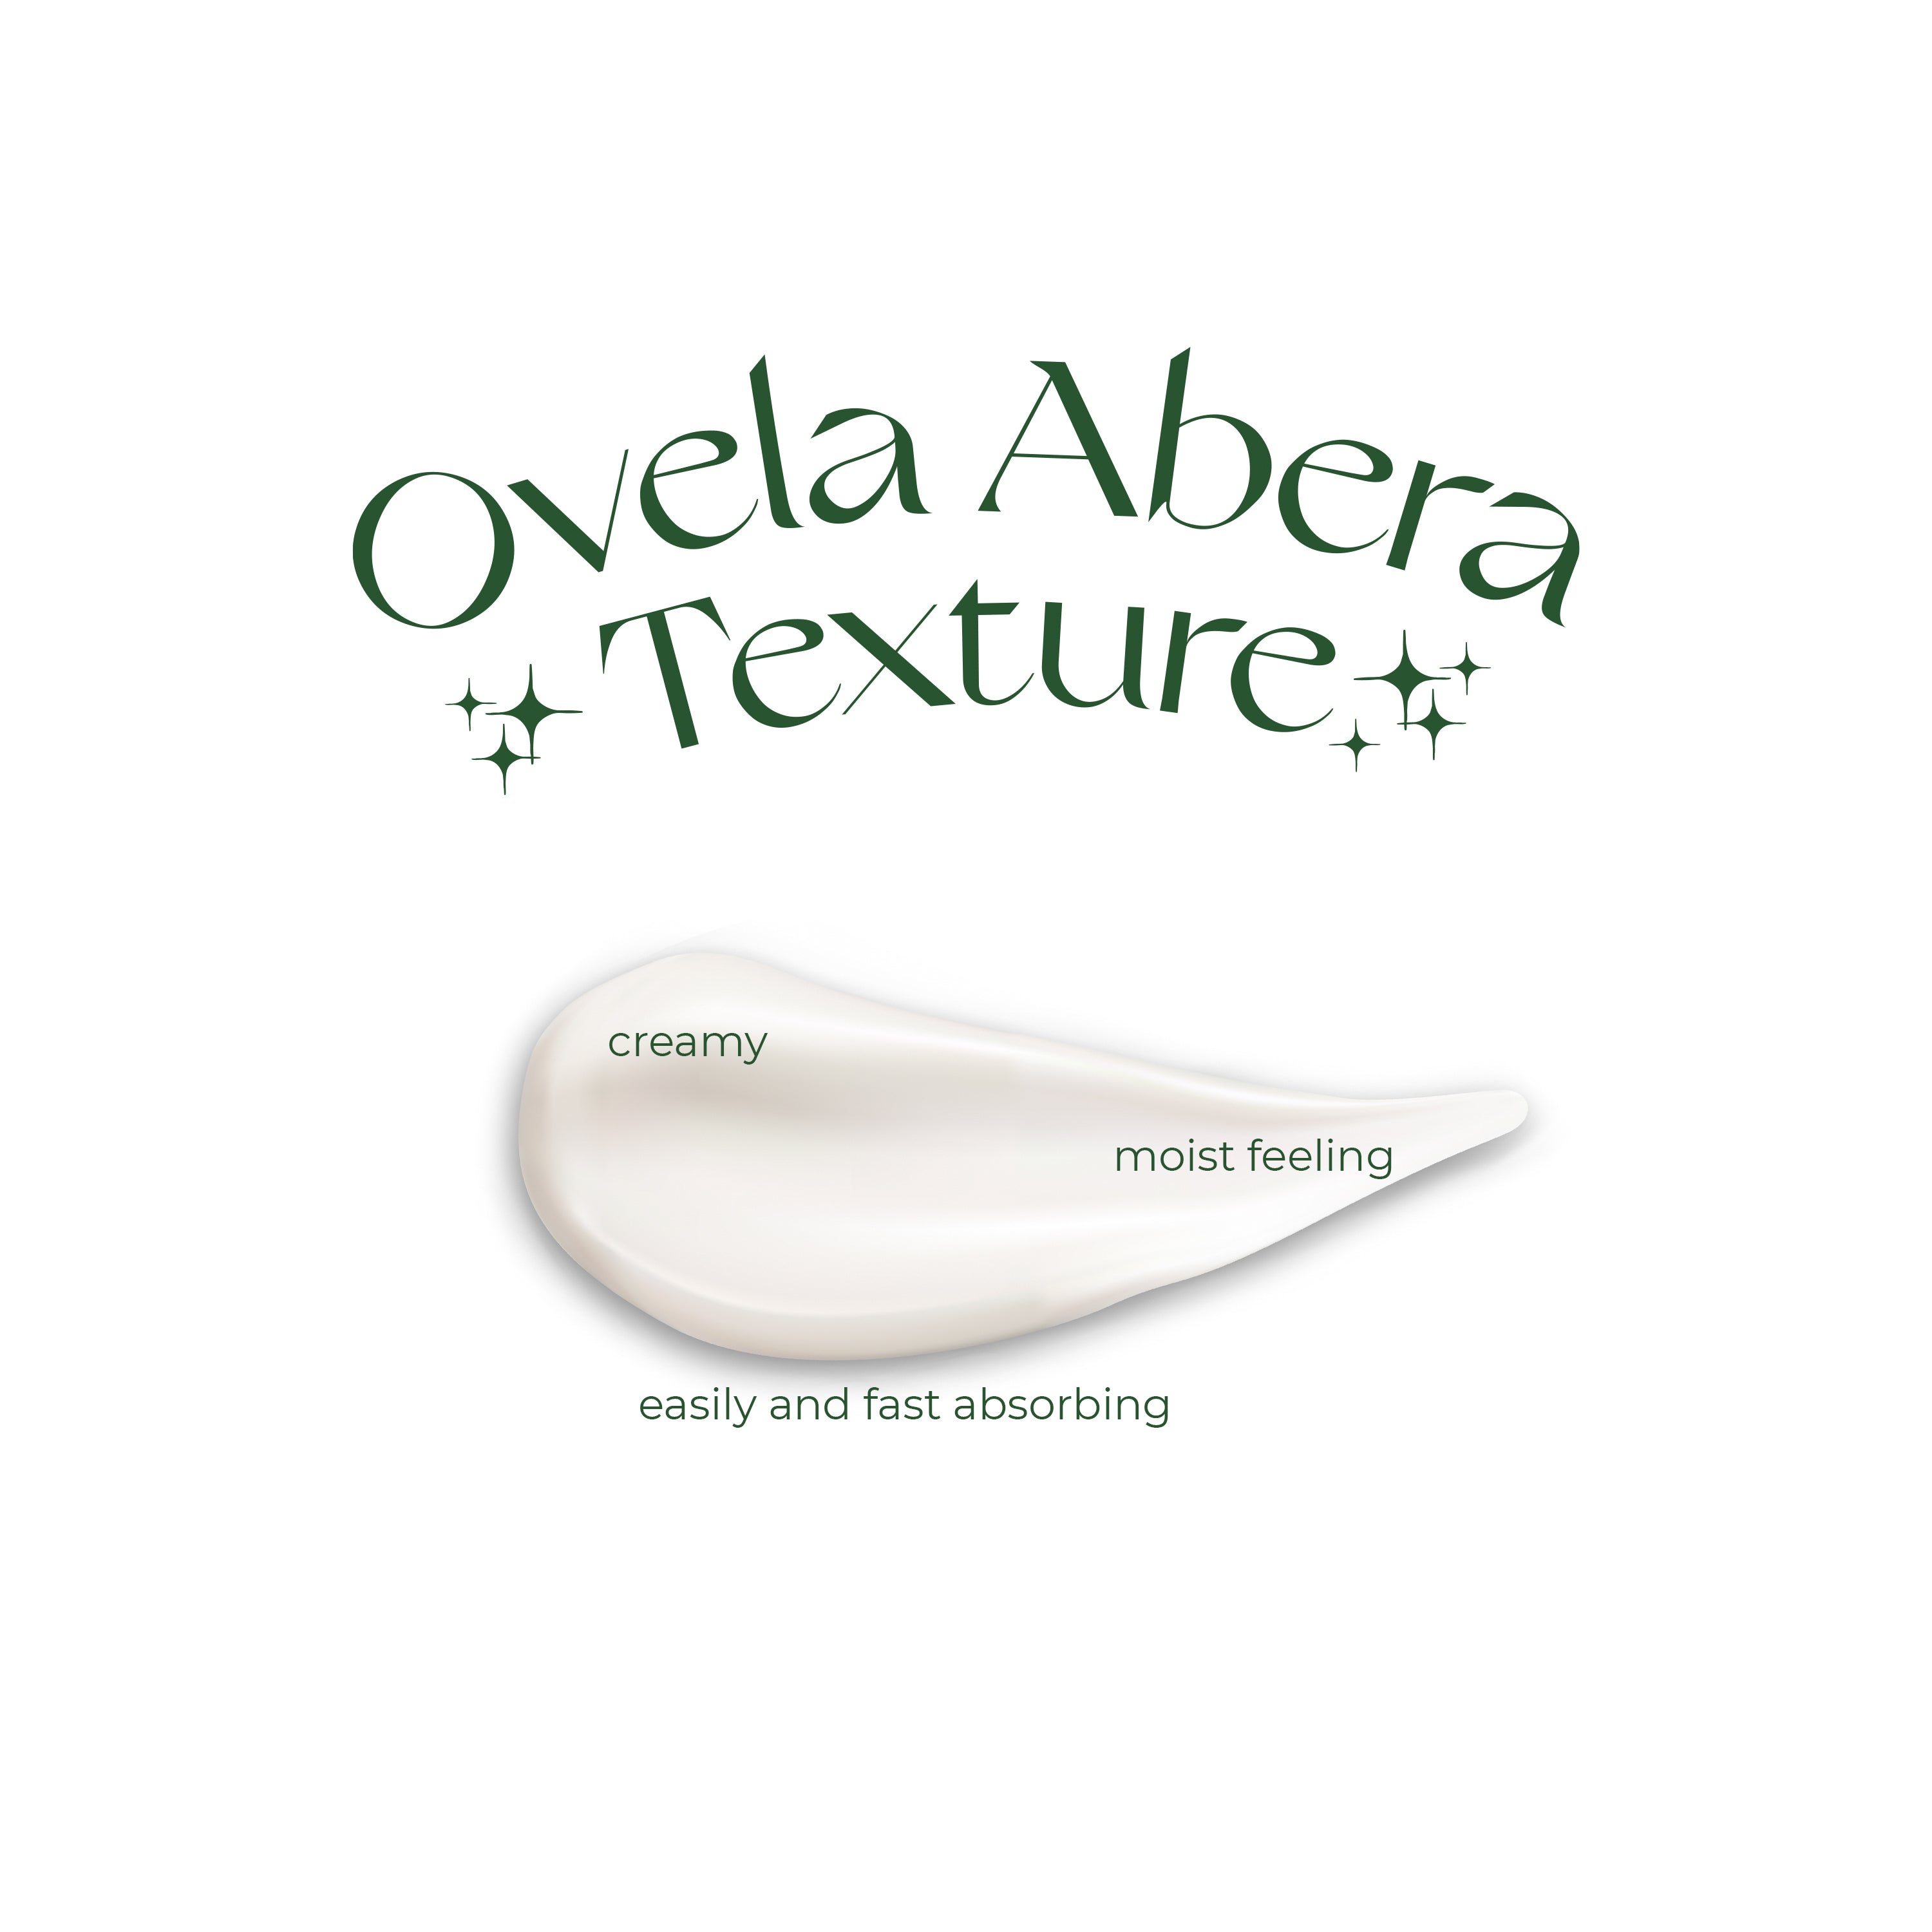 Stretch Mark Cream Ovela Abera - Official 01